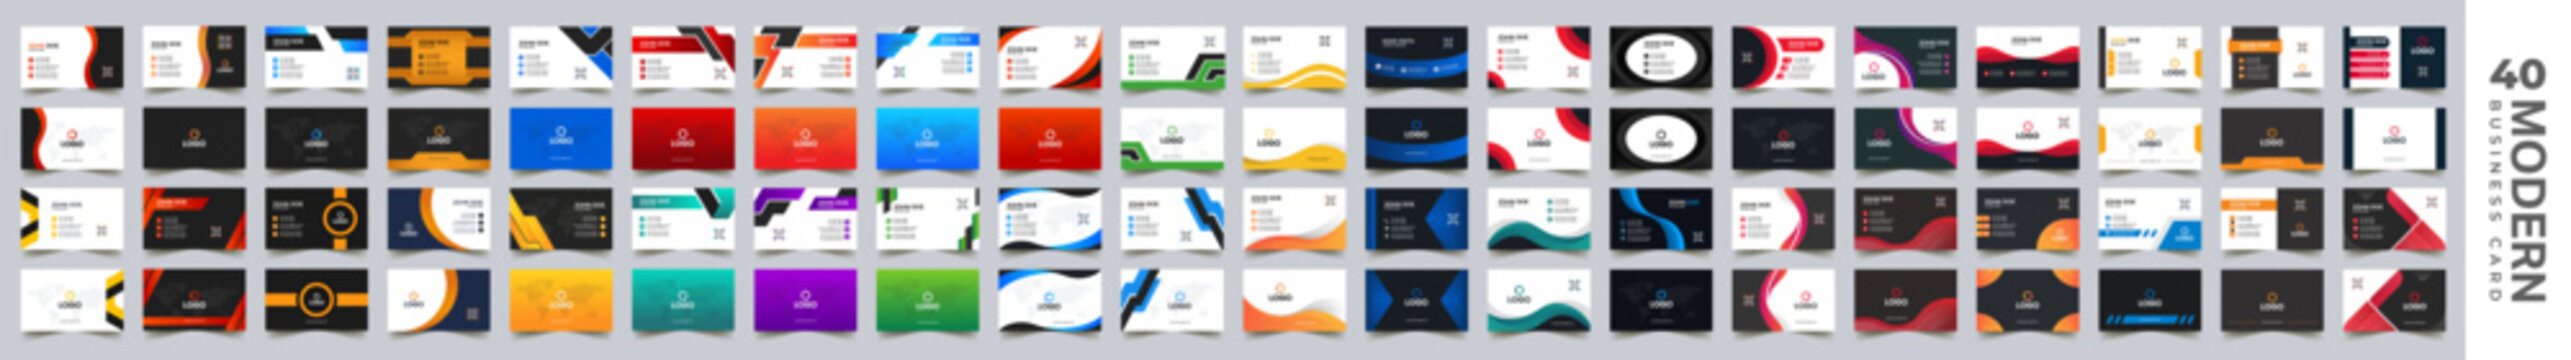 Set of 40 modern business card print templates, double-sided business card design template, Creative and clean corporate business card template, Luxury and elegant business card design template